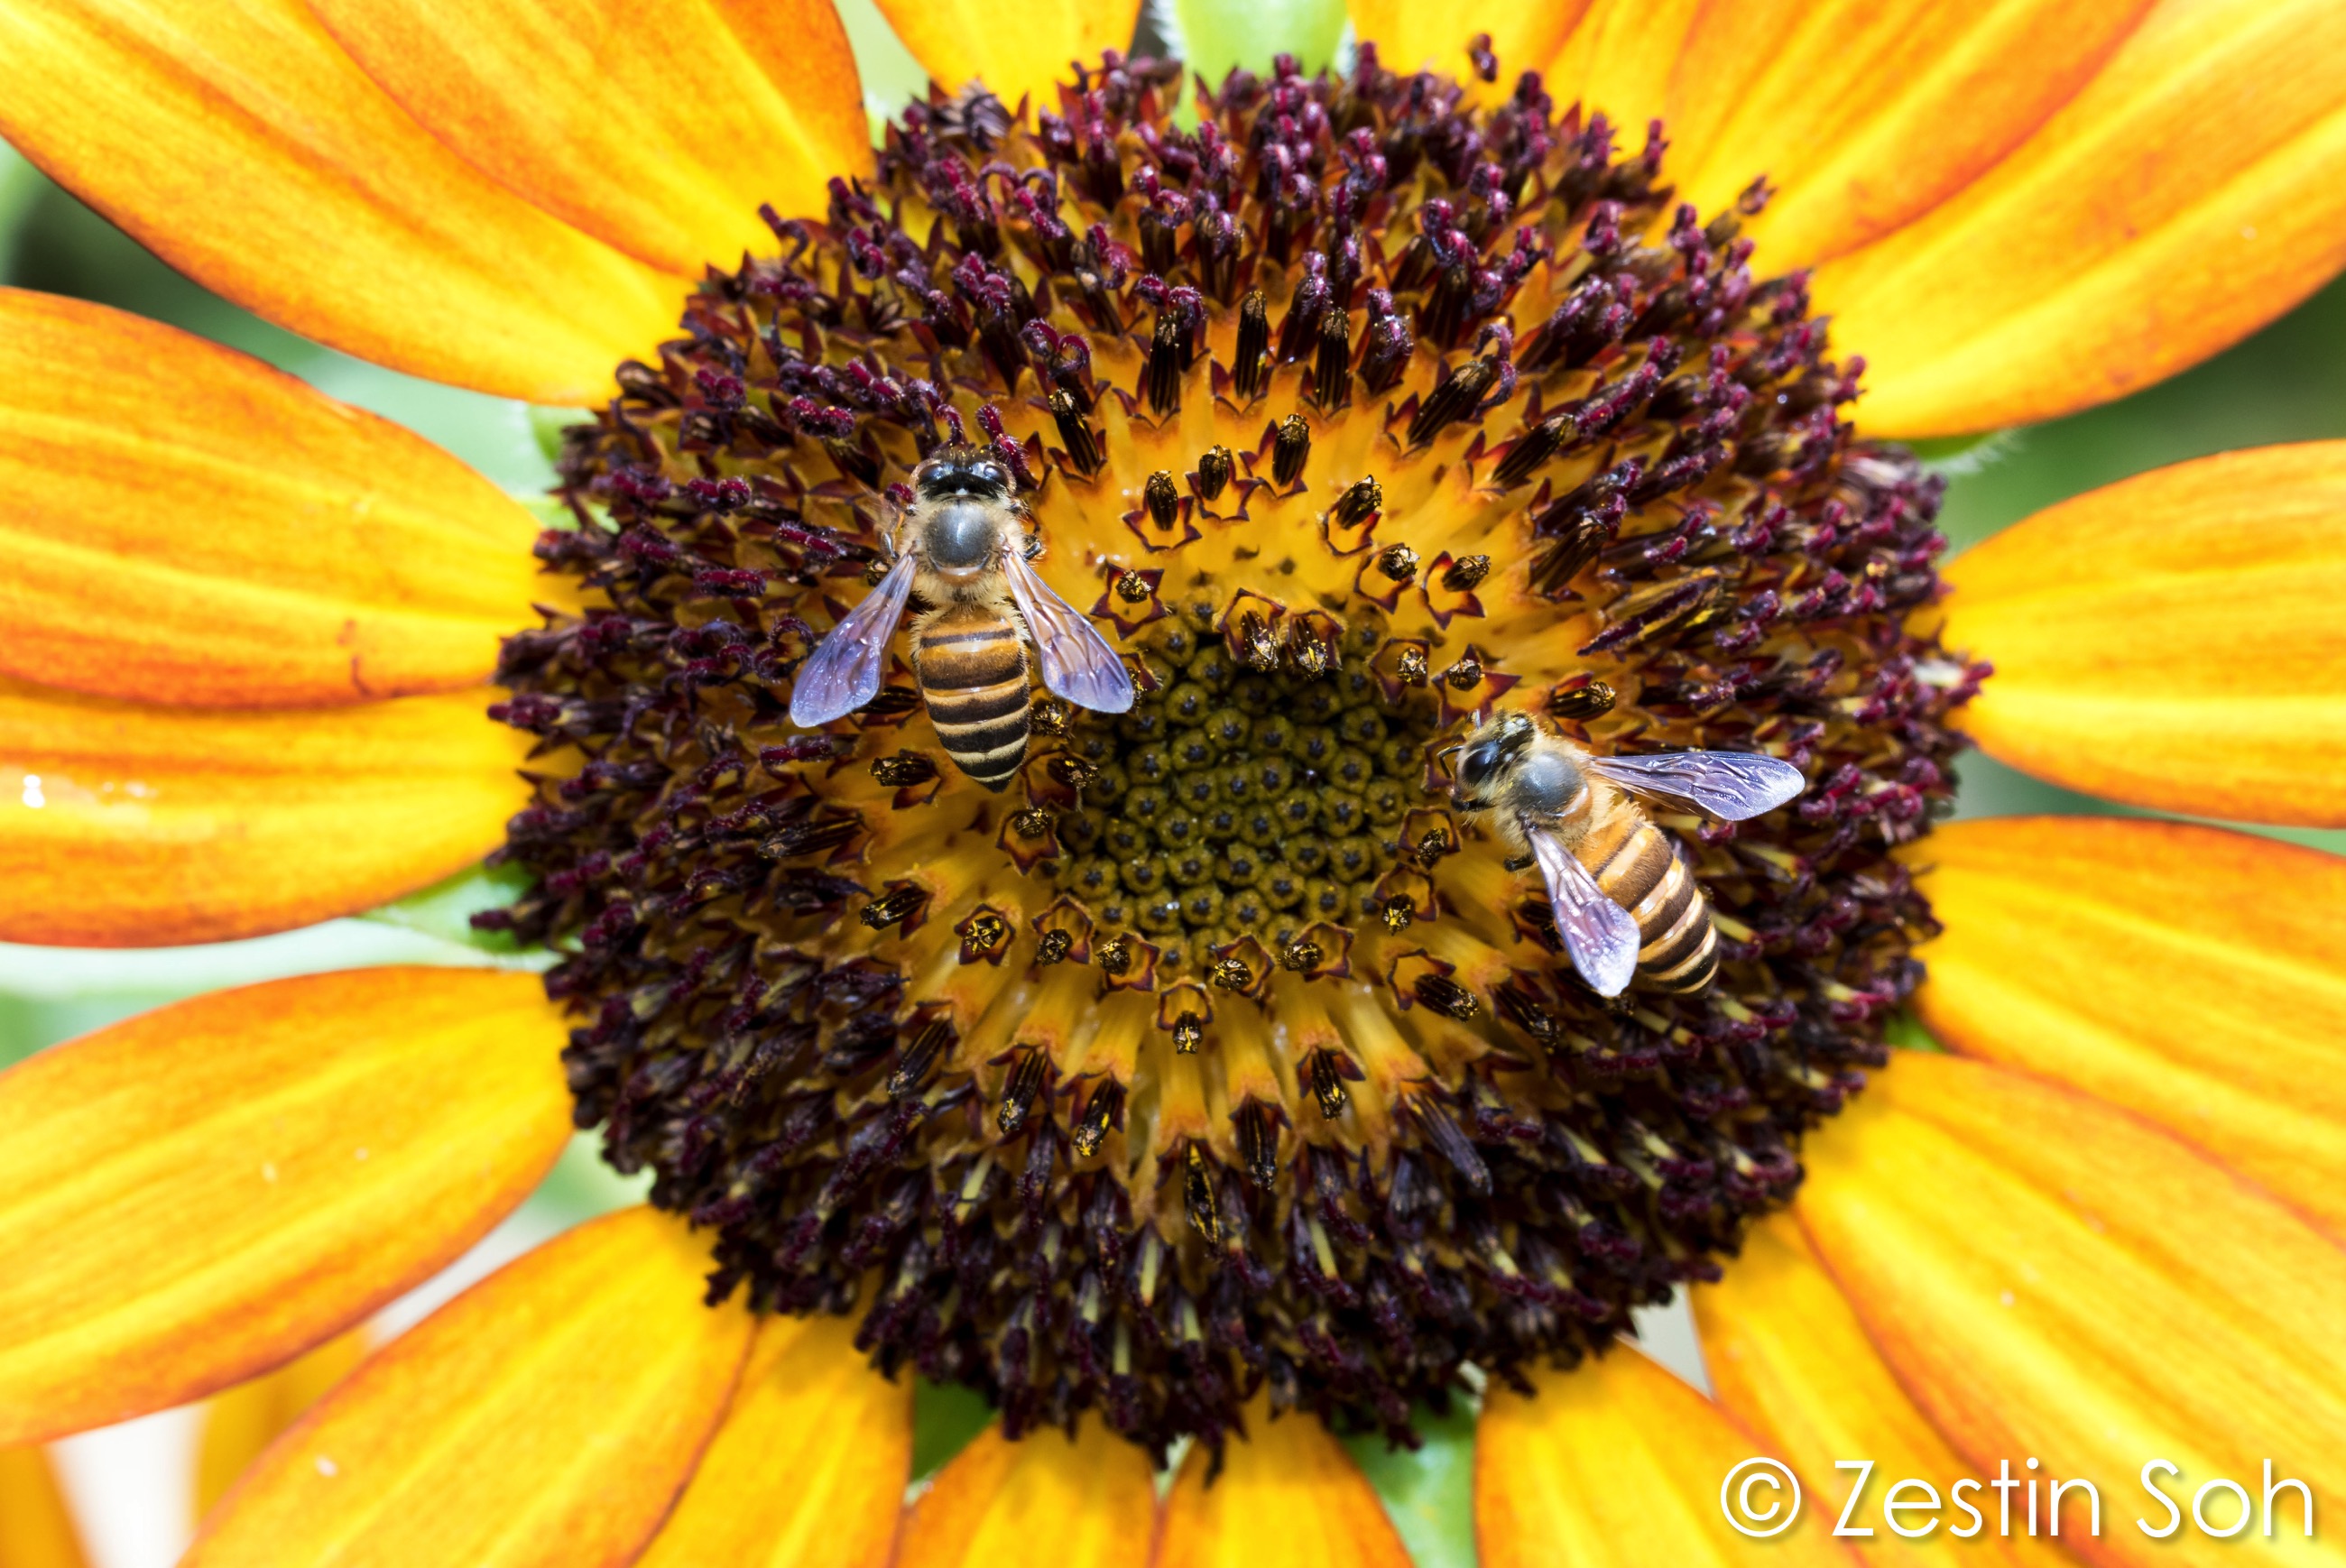 The Buzz In ‘Bee-utiful’ Community Gardens